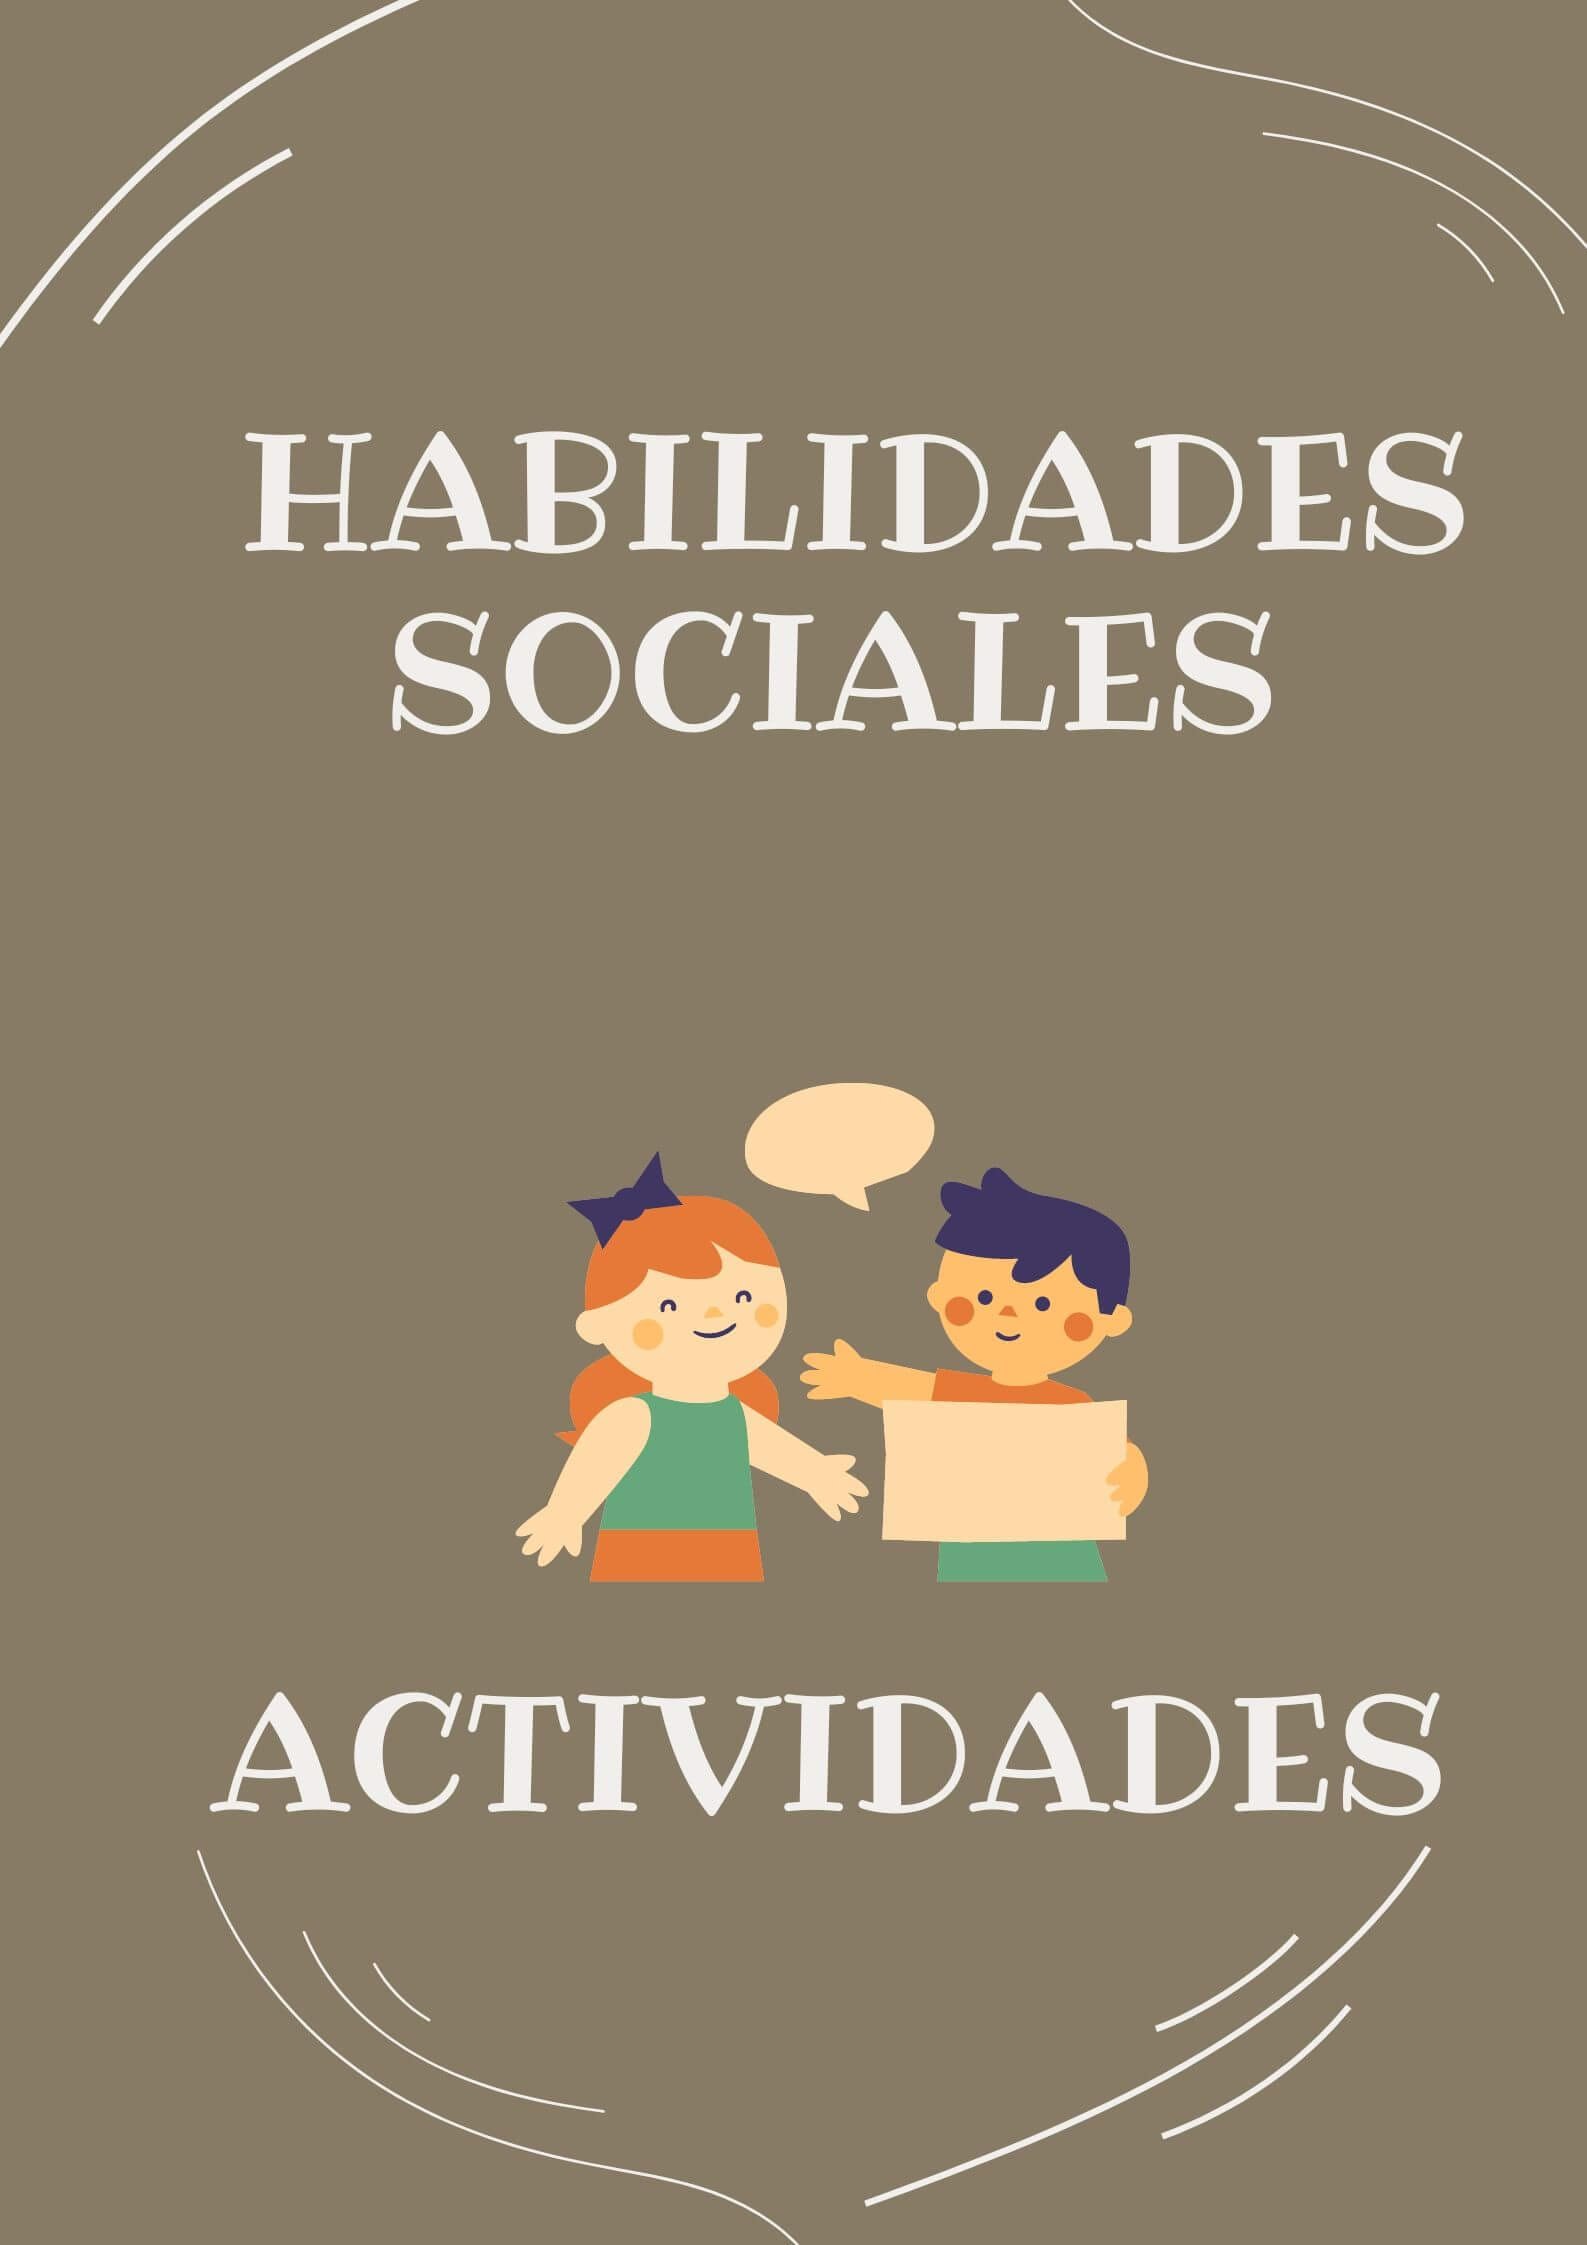 HABILIDADS SOCIALES ACTIVIDADES.jpg